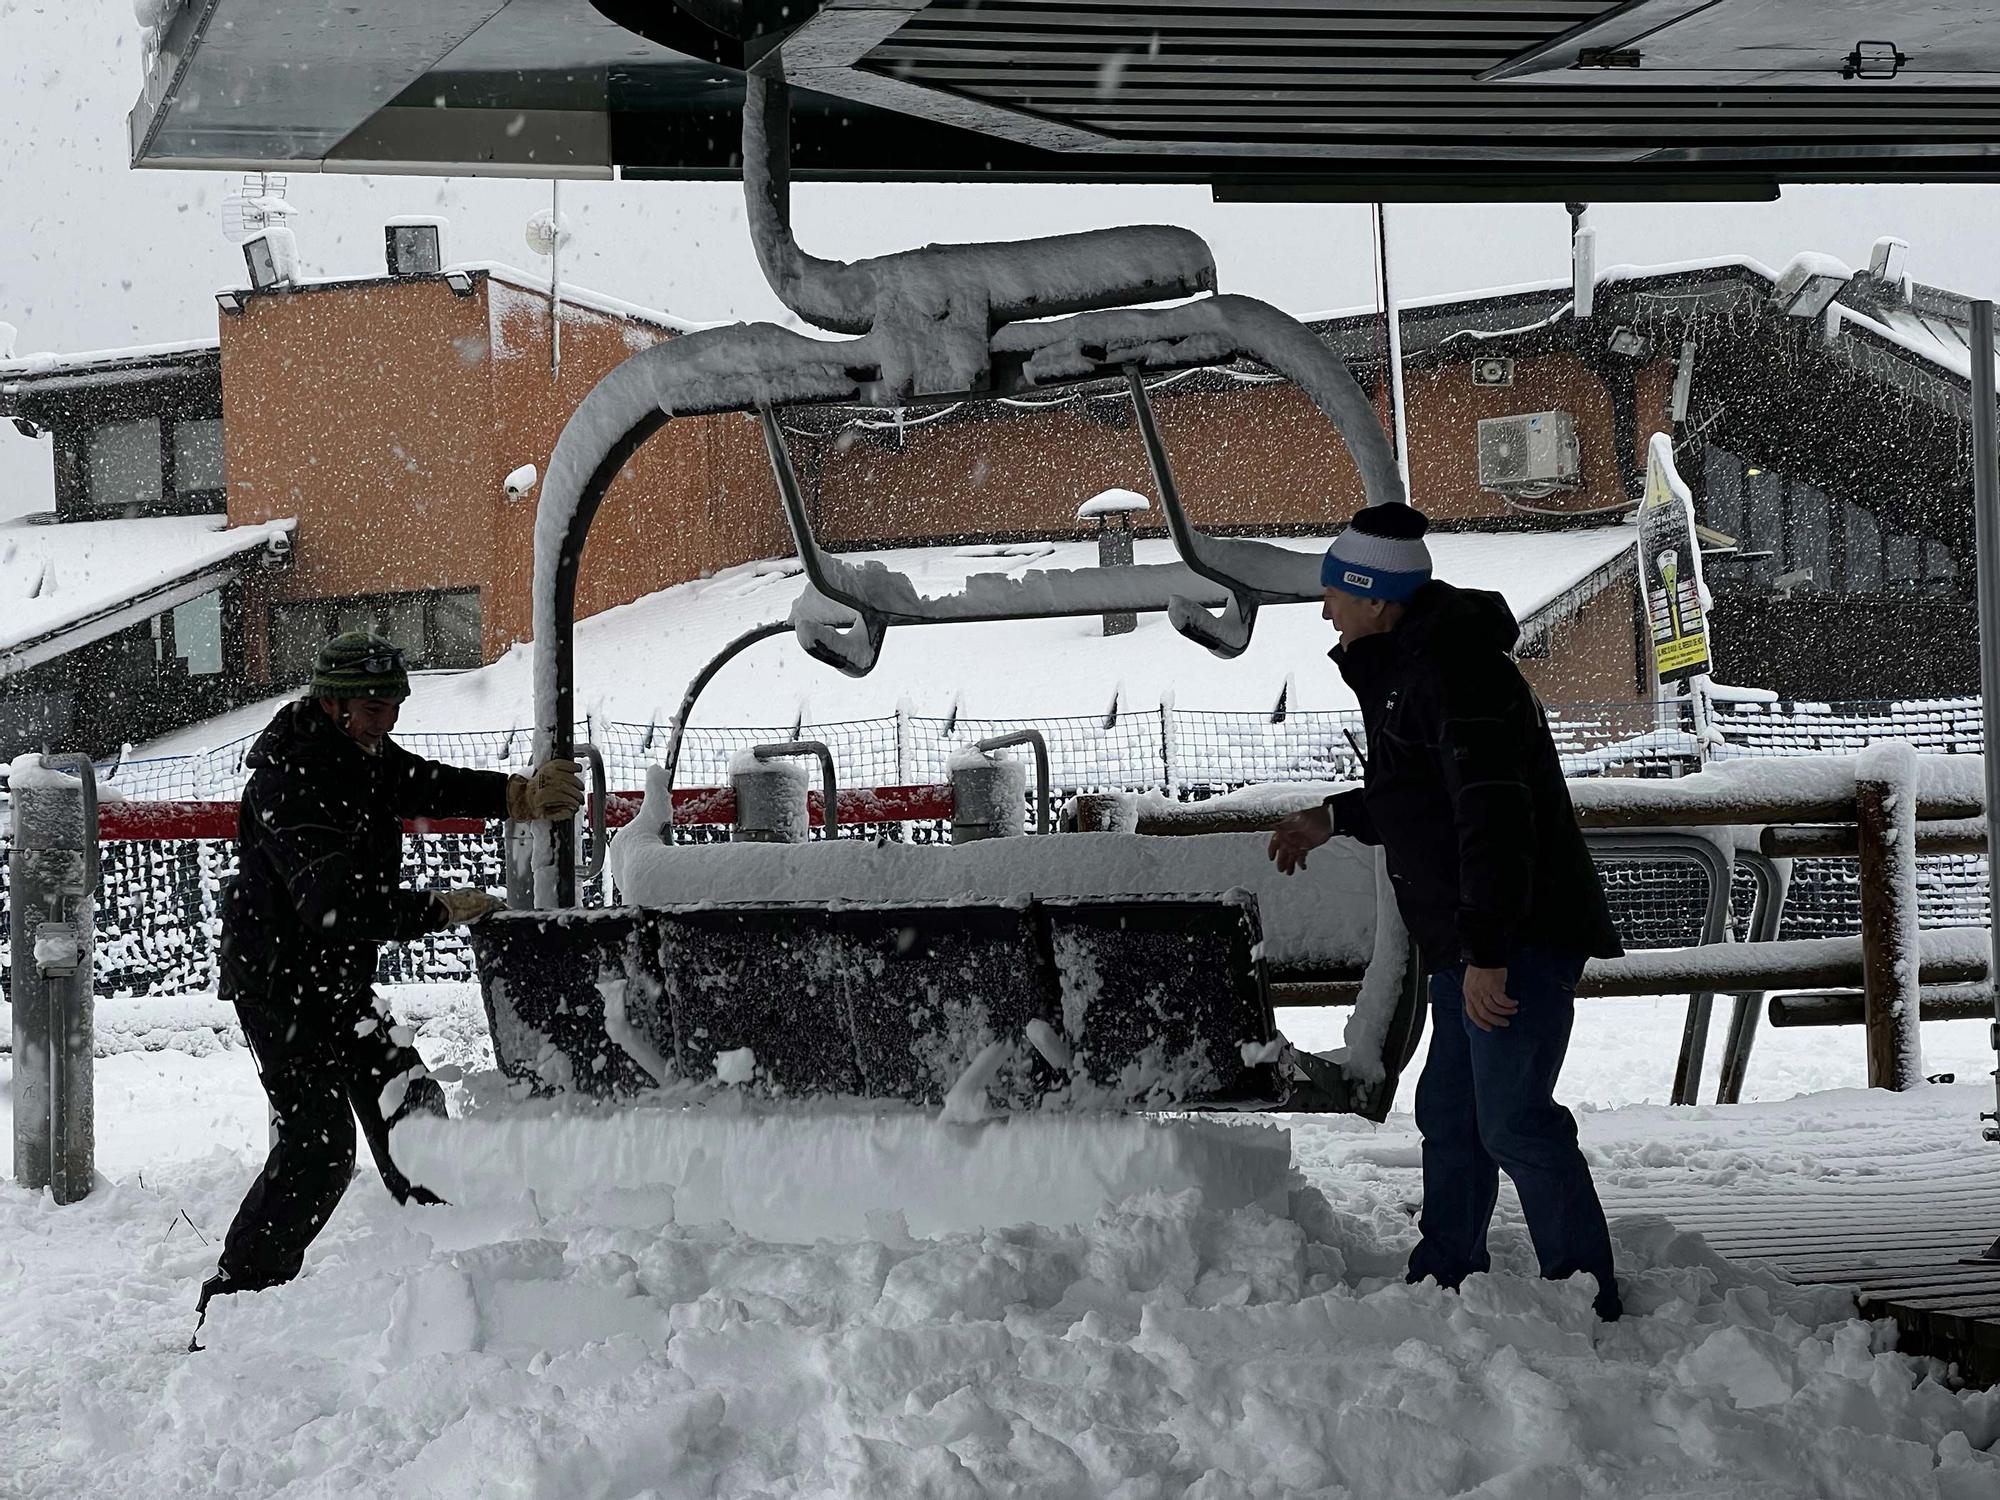 Primera nevada important de l'any al Pirineu gironí